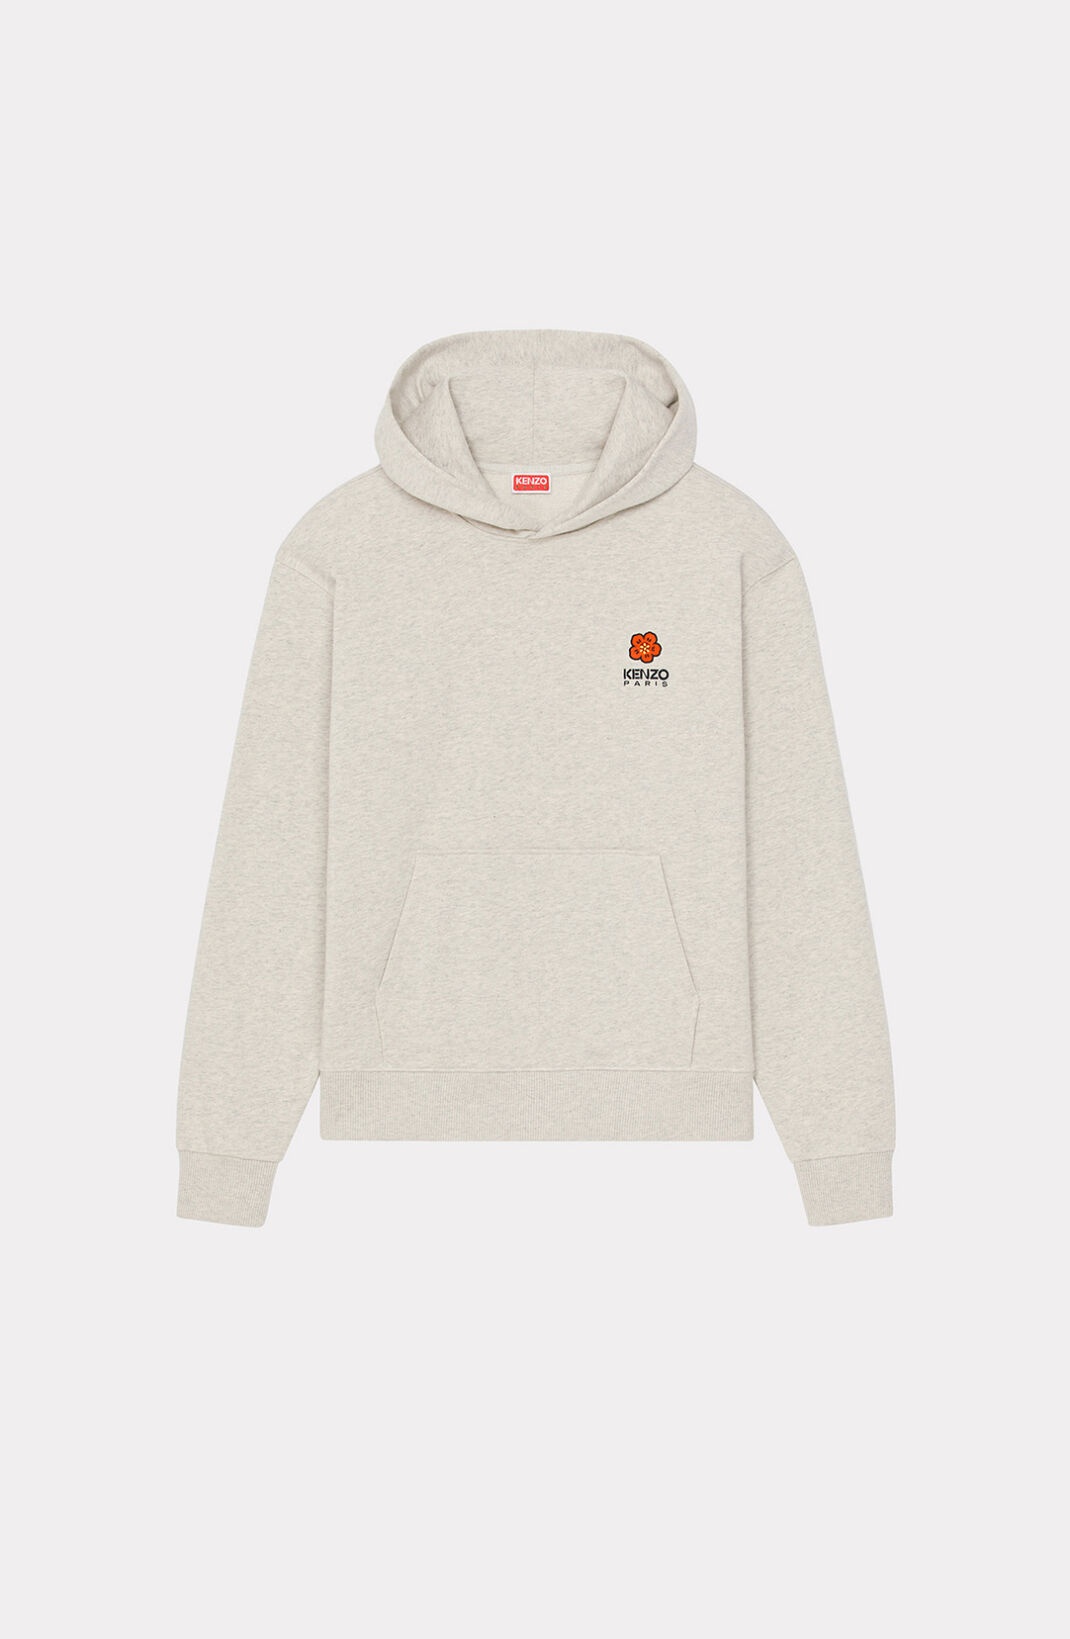 BOKE FLOWER' crest hoodie sweatshirt with zip - 1